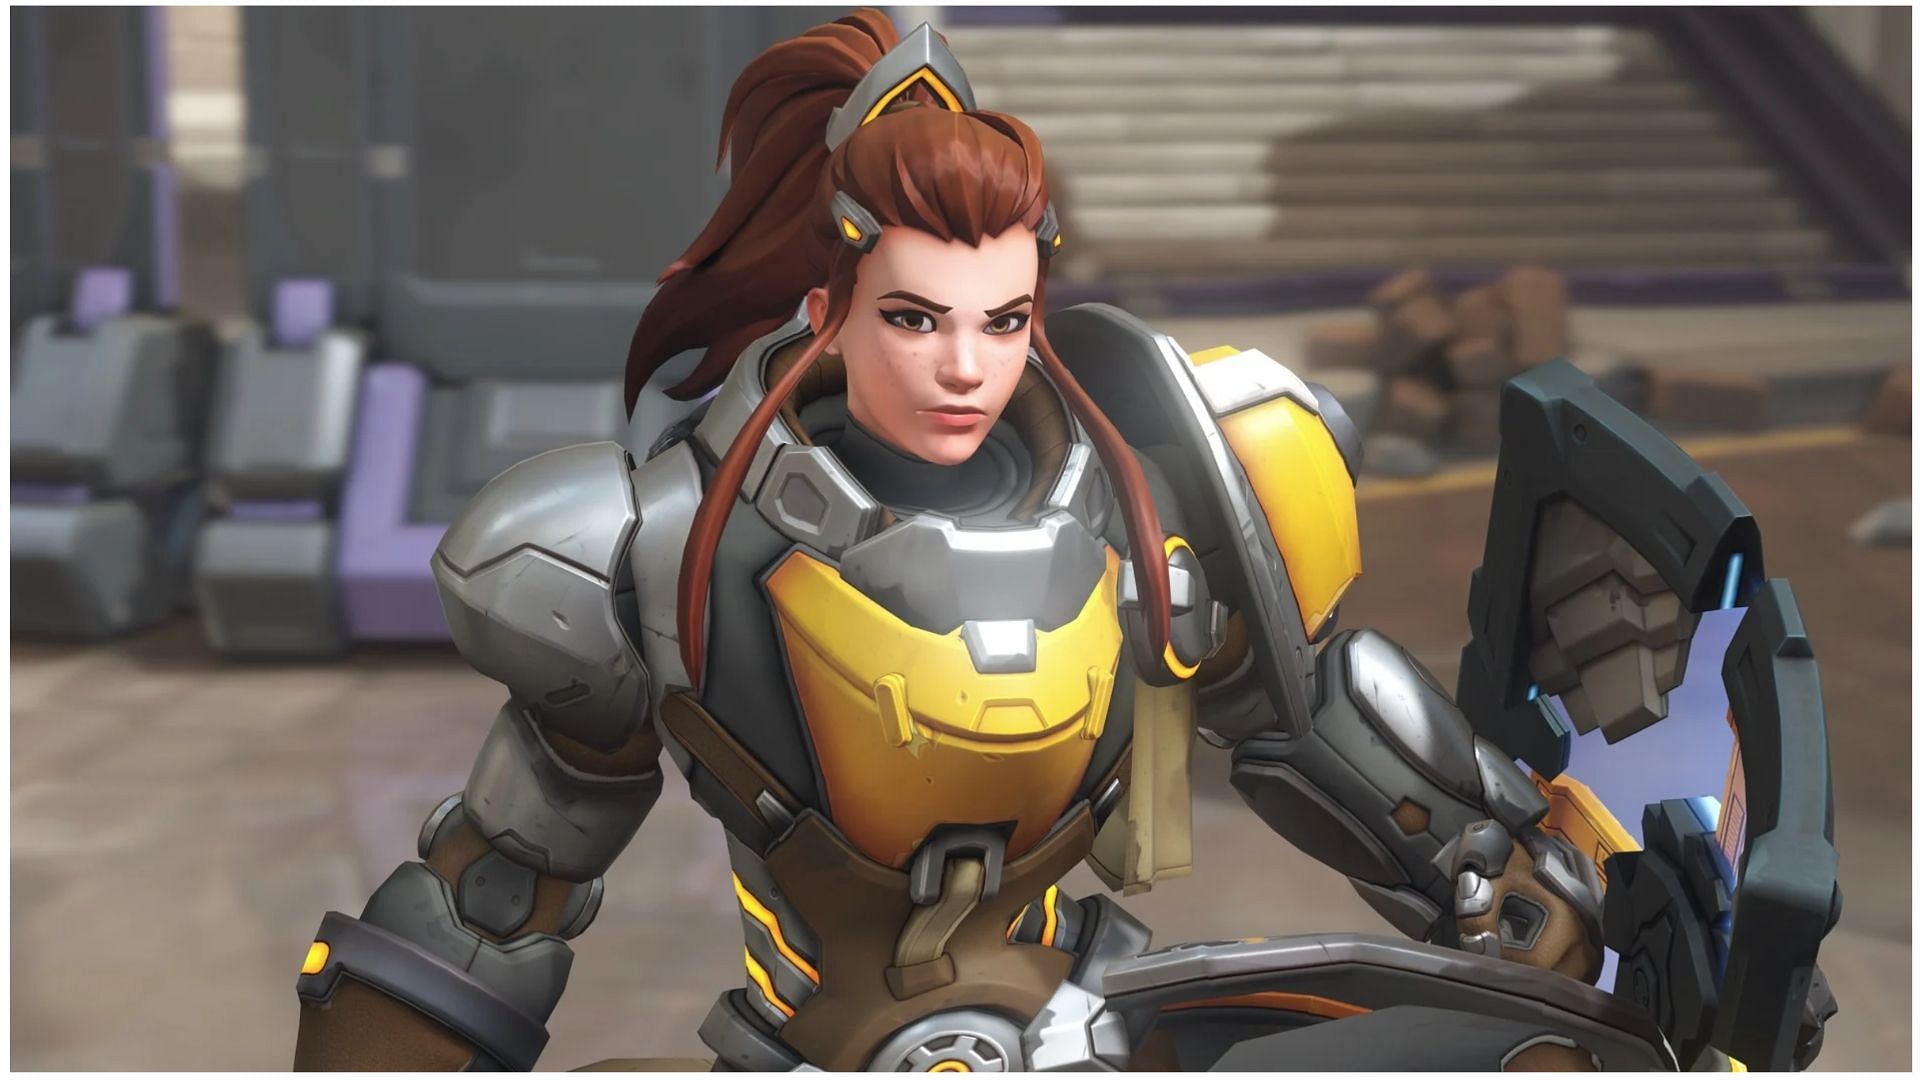 Brigitte as seen in Overwatch 2 (Image via Activision Blizzard)